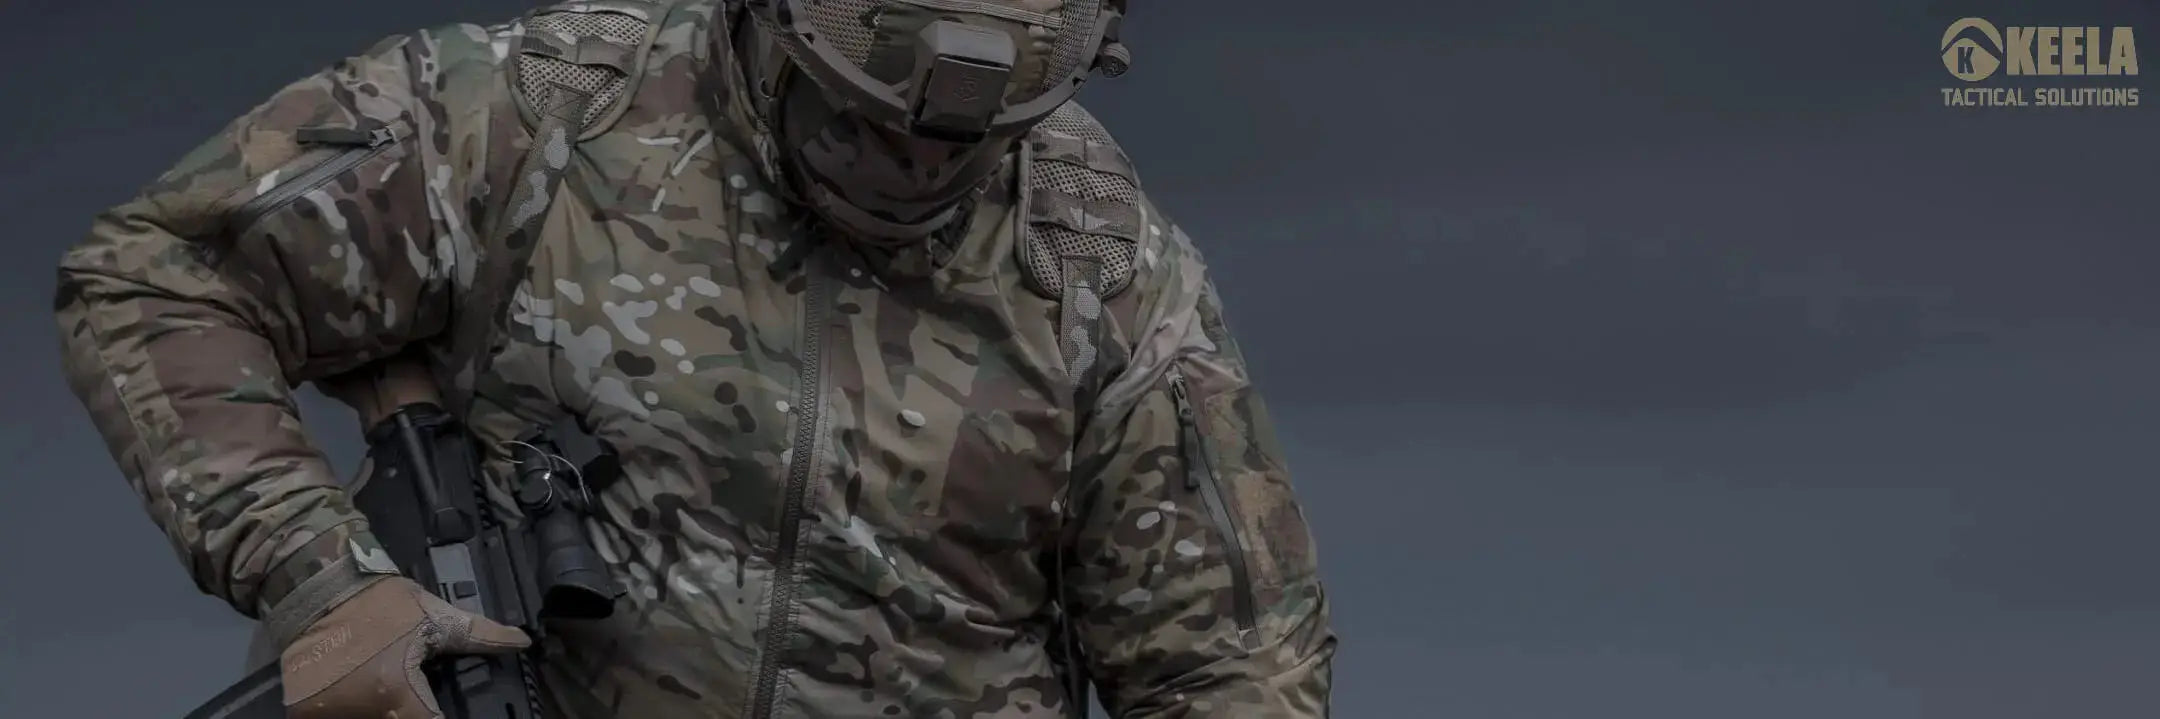 Keela Military Tactical Jackets